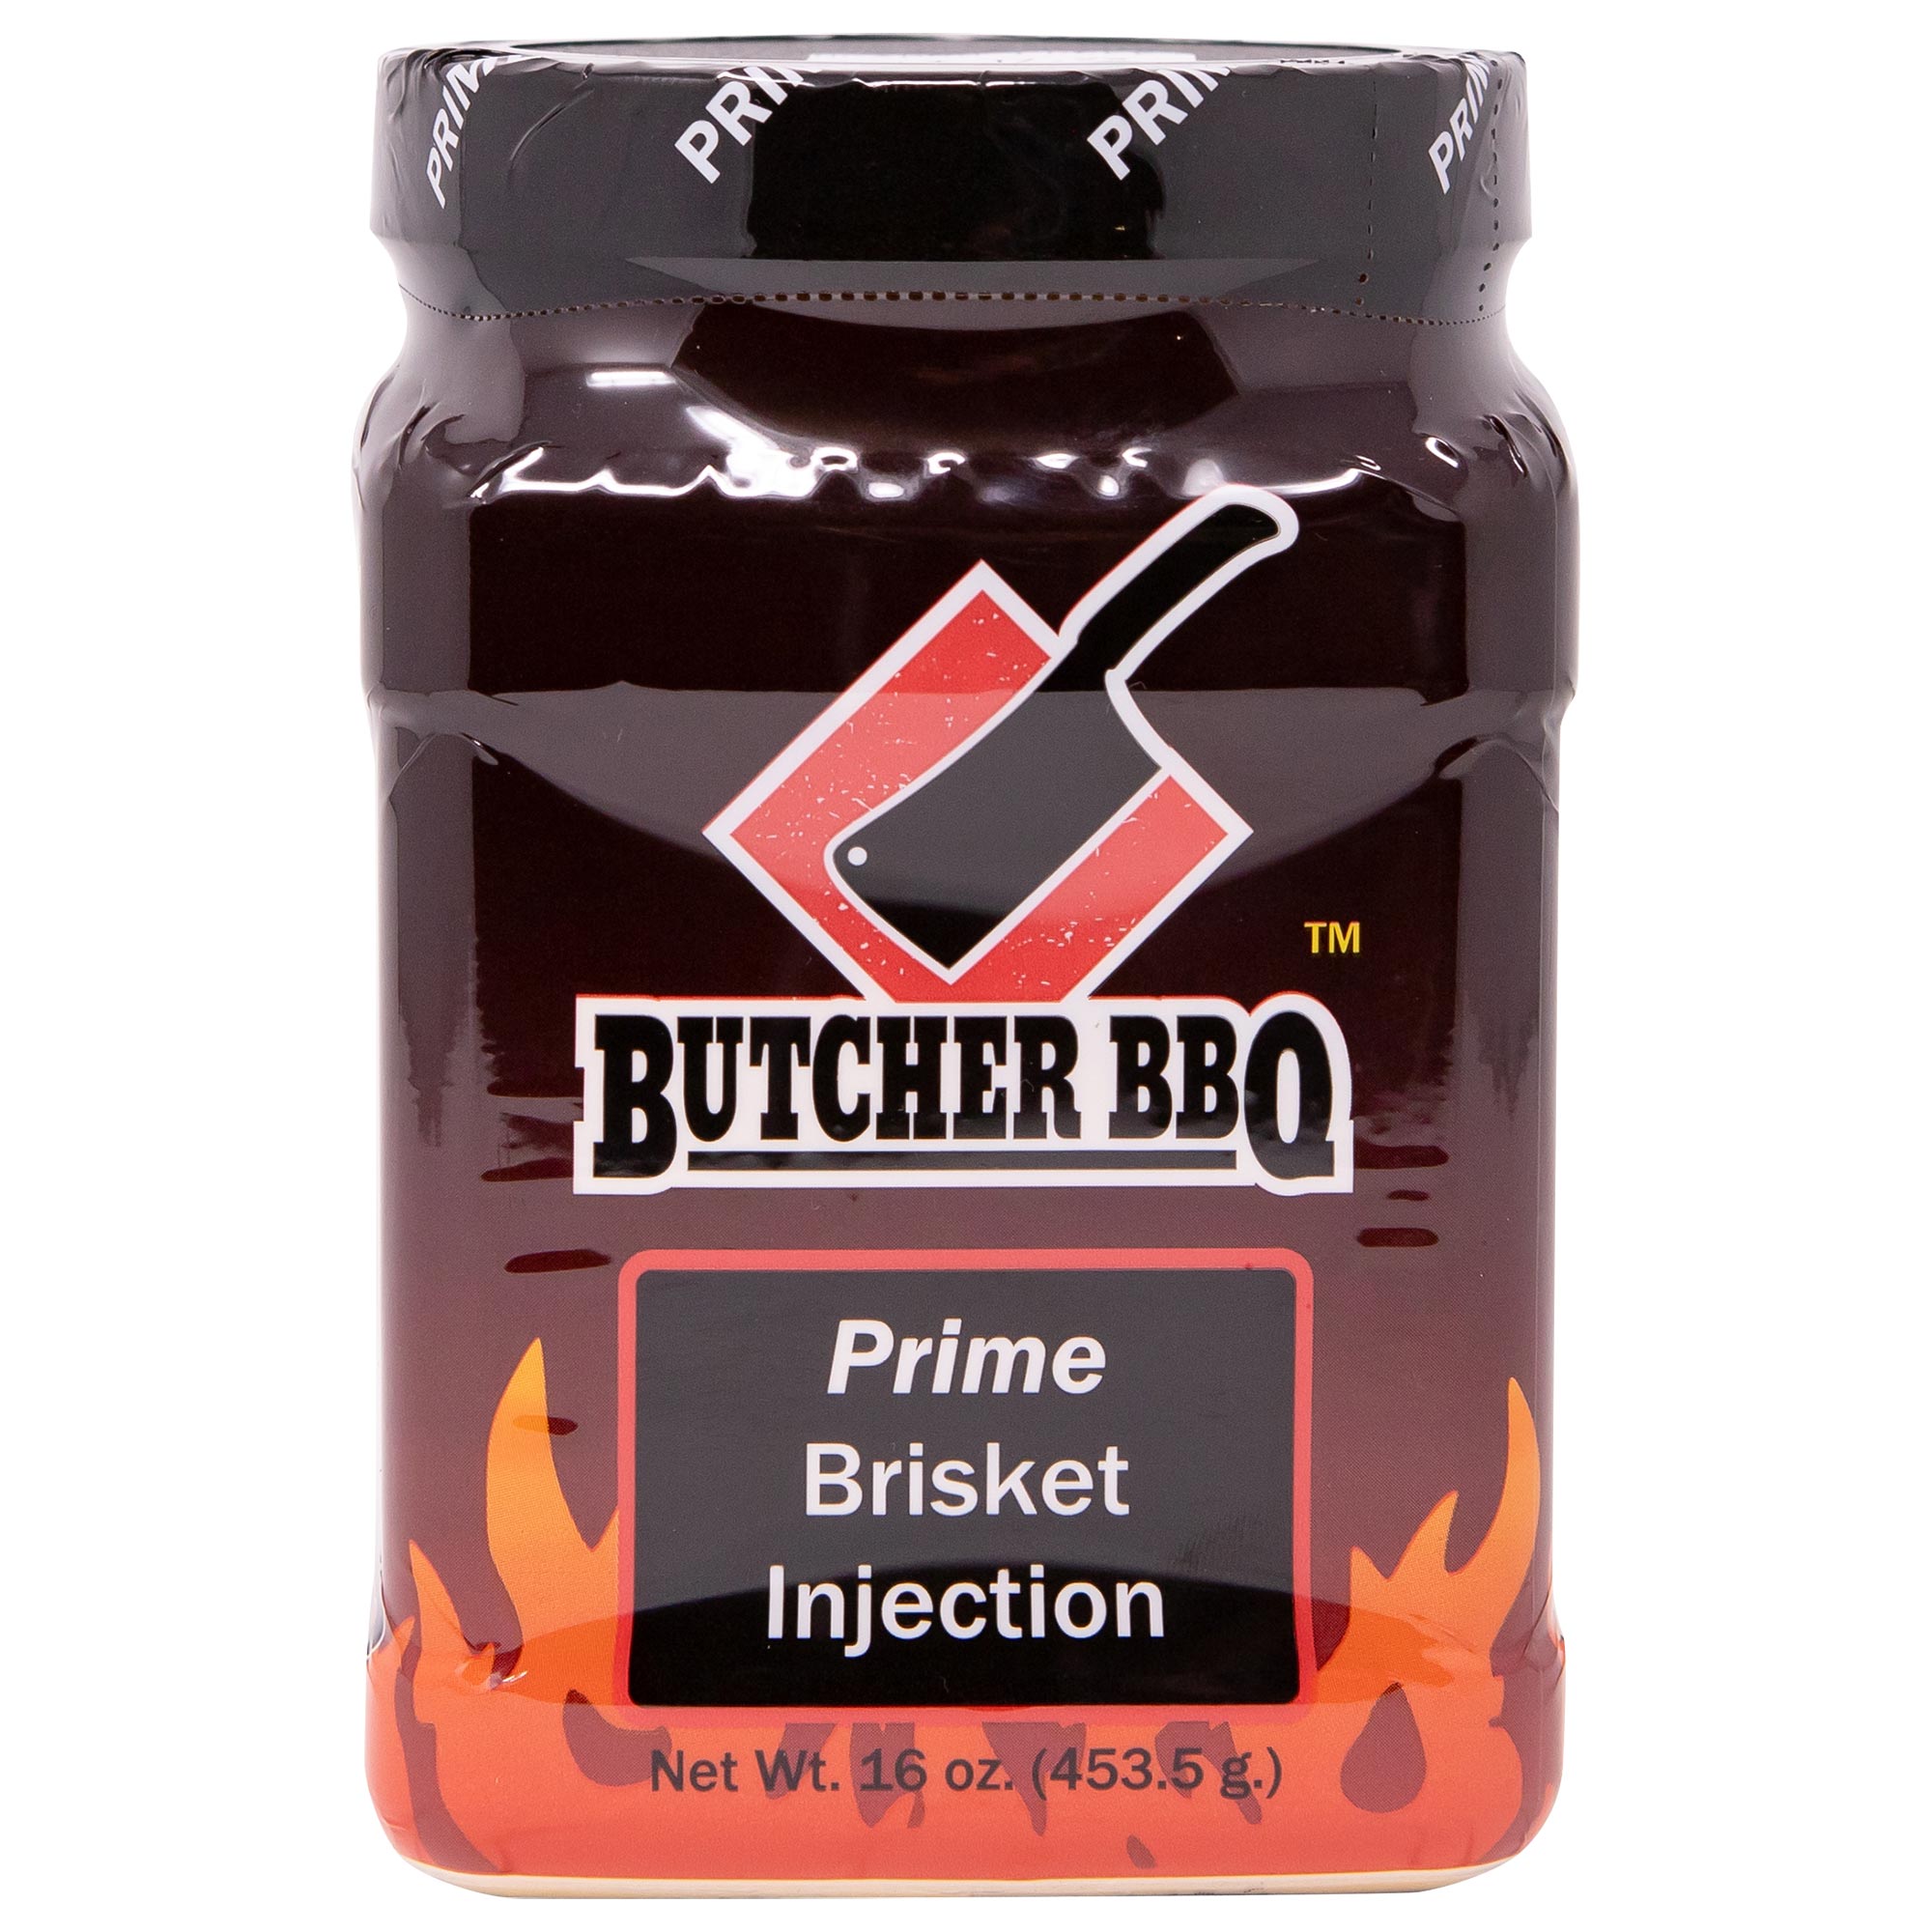 Butcher BBQ - Prime Brisket Injection